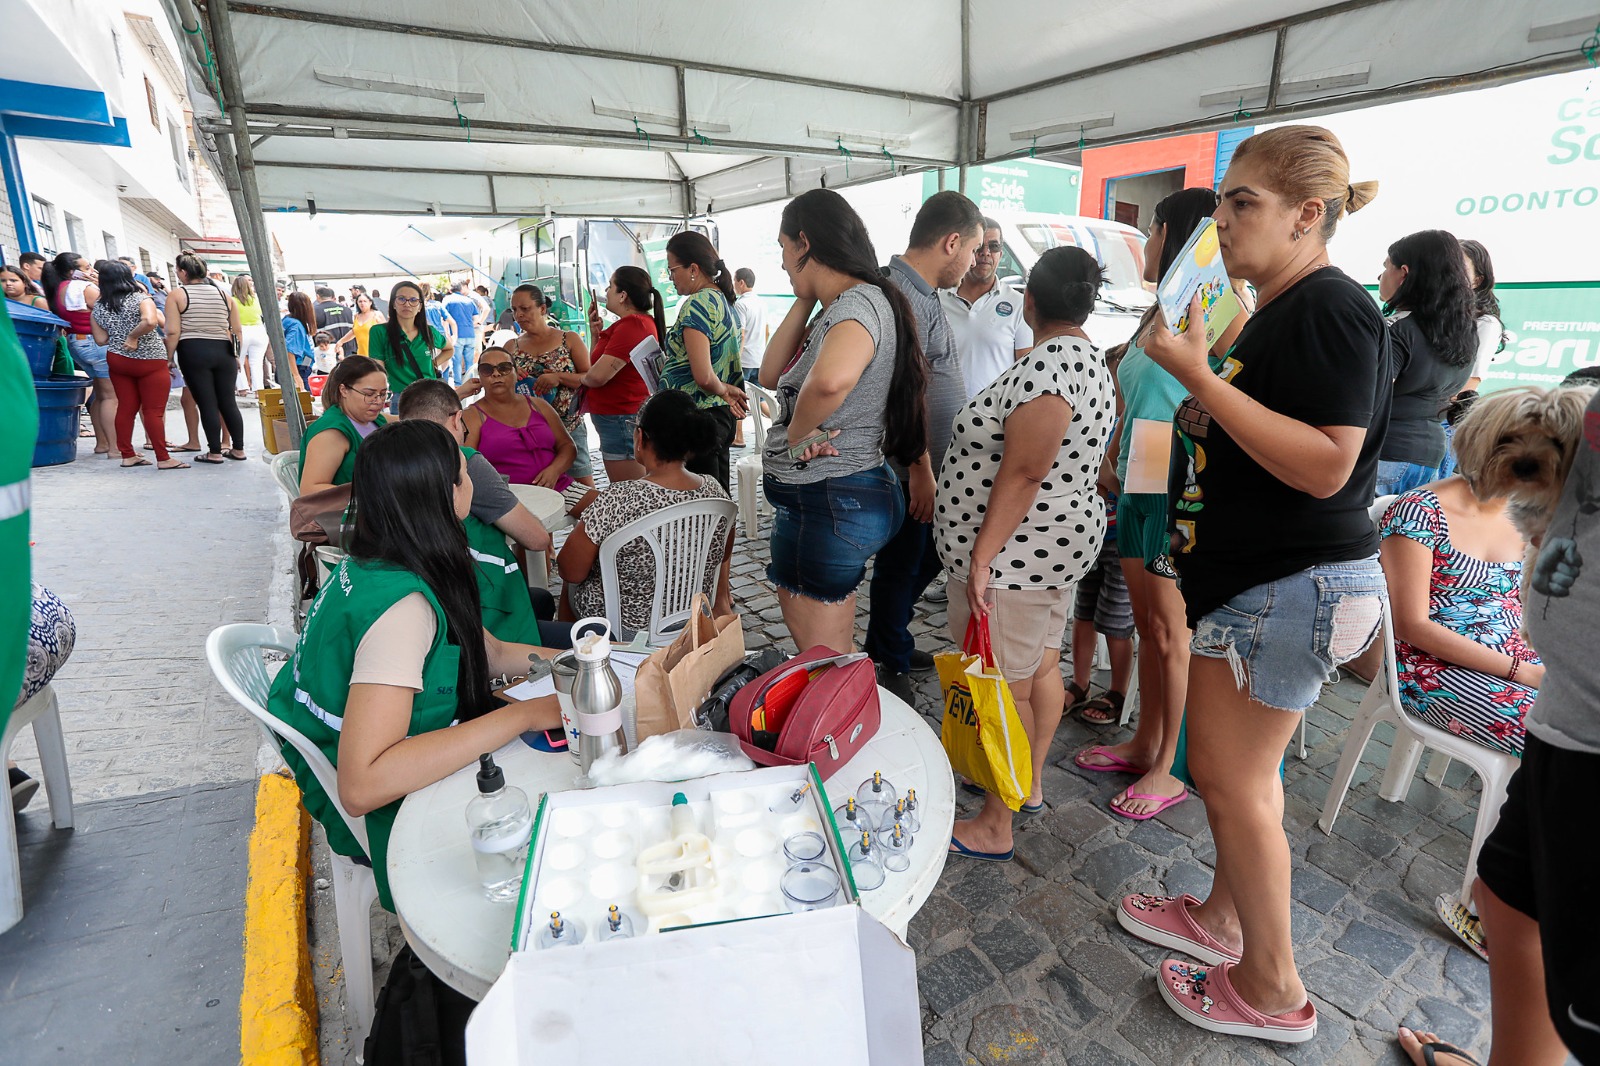 Caravana-saúde-vilarafael-vilapeladas-vacina-acolhimento